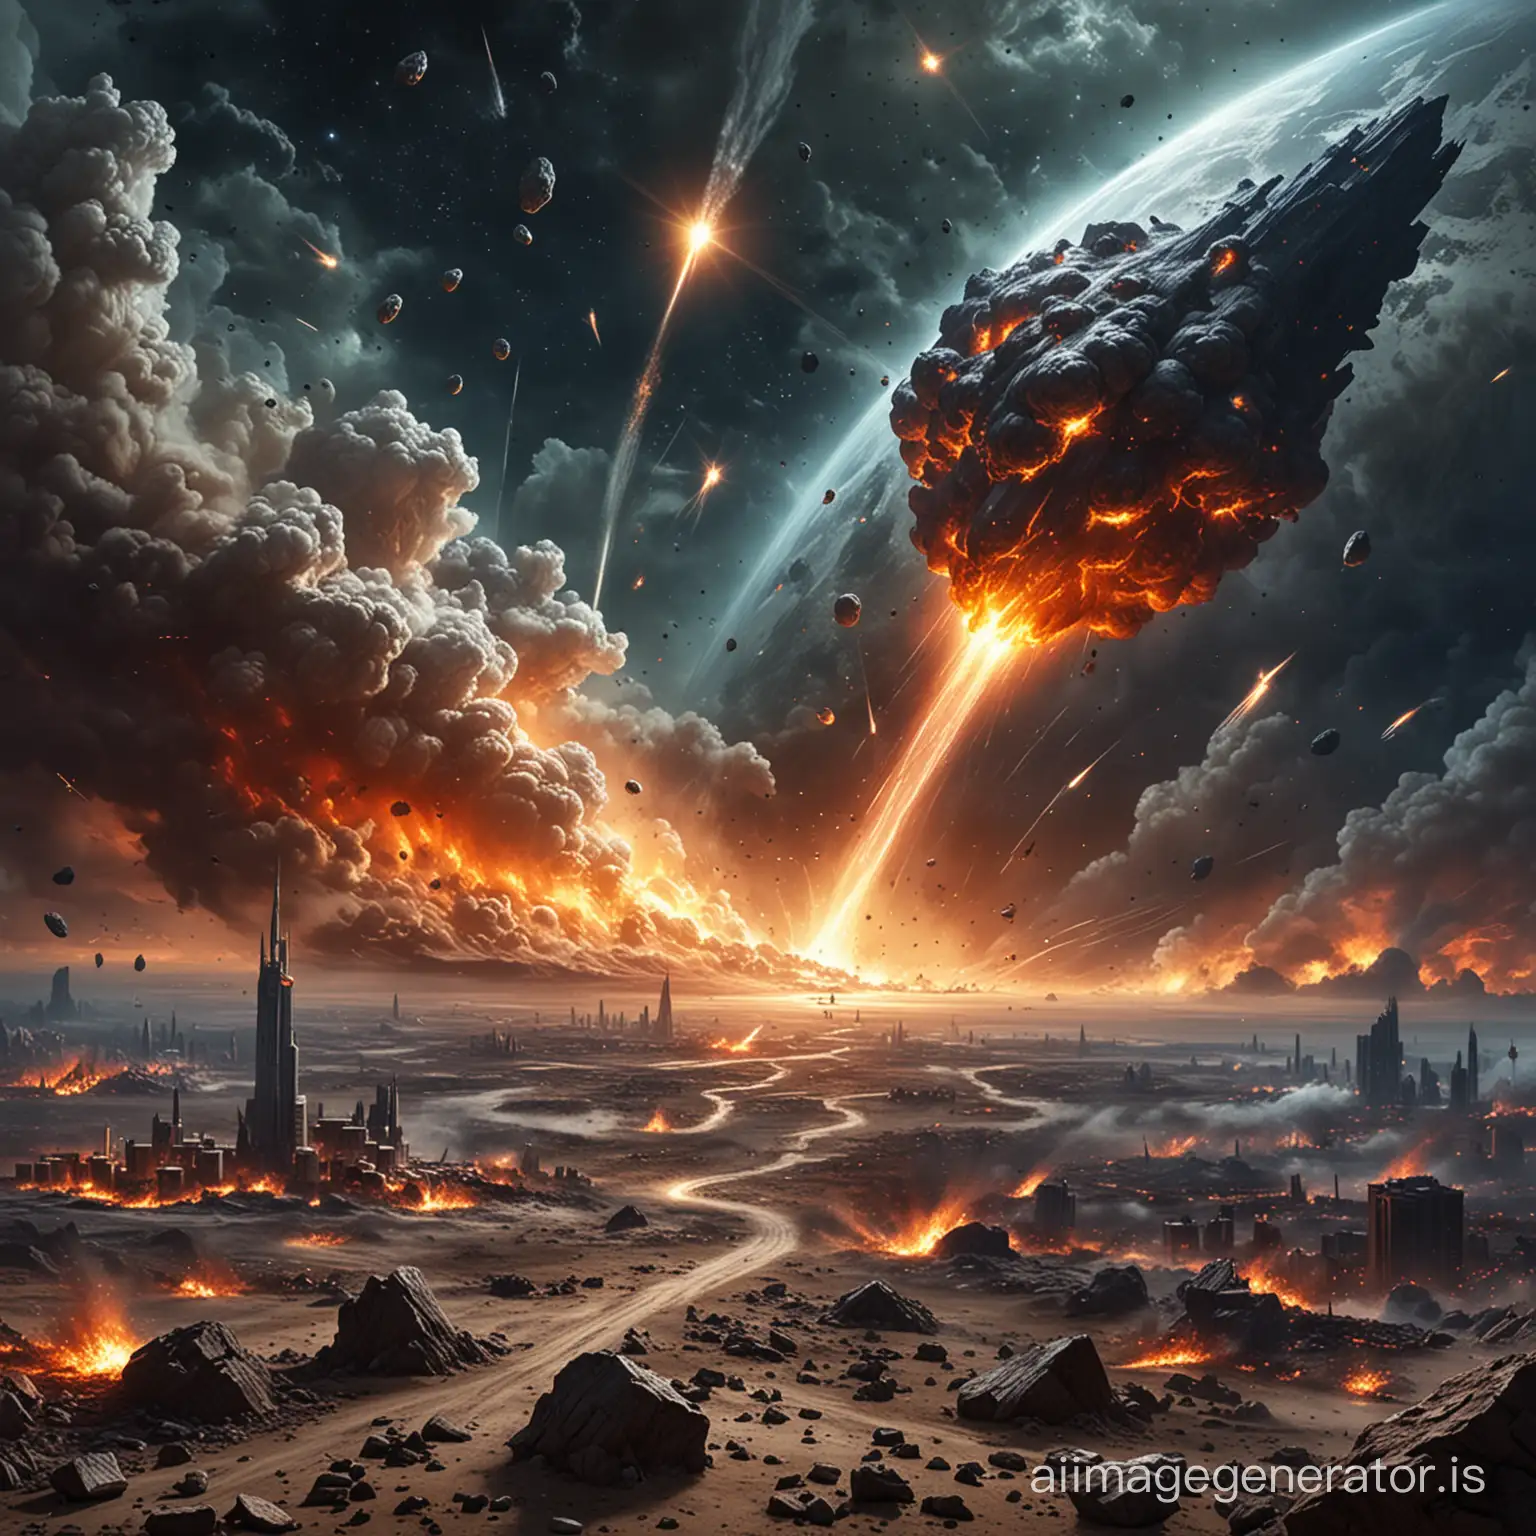 Apocalyptic-Scene-Meteor-Shower-Devastating-Earth